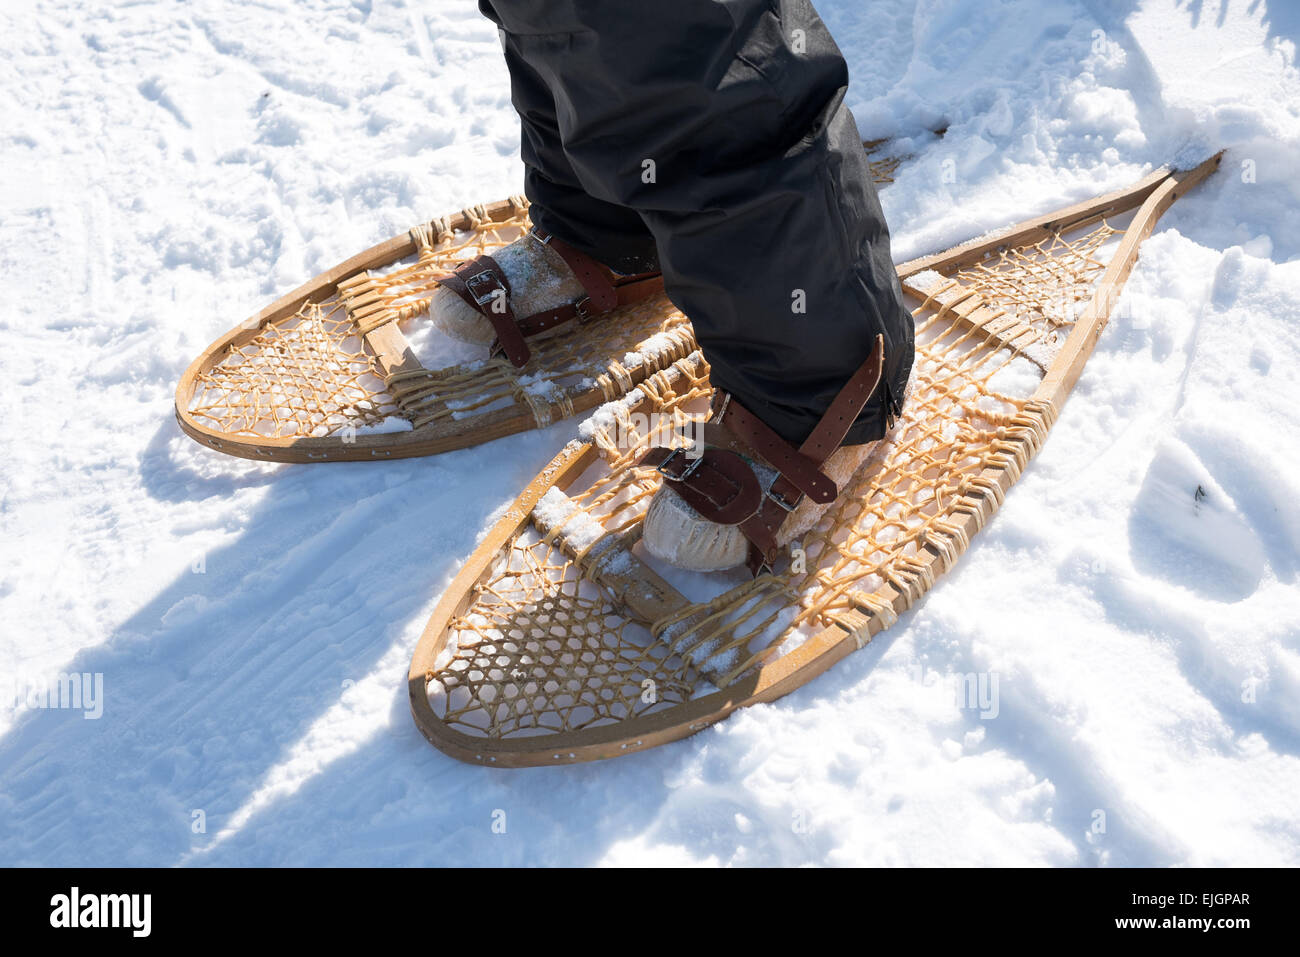 traditional-native-snowshoes-quebec-canada-EJGPAR.jpg